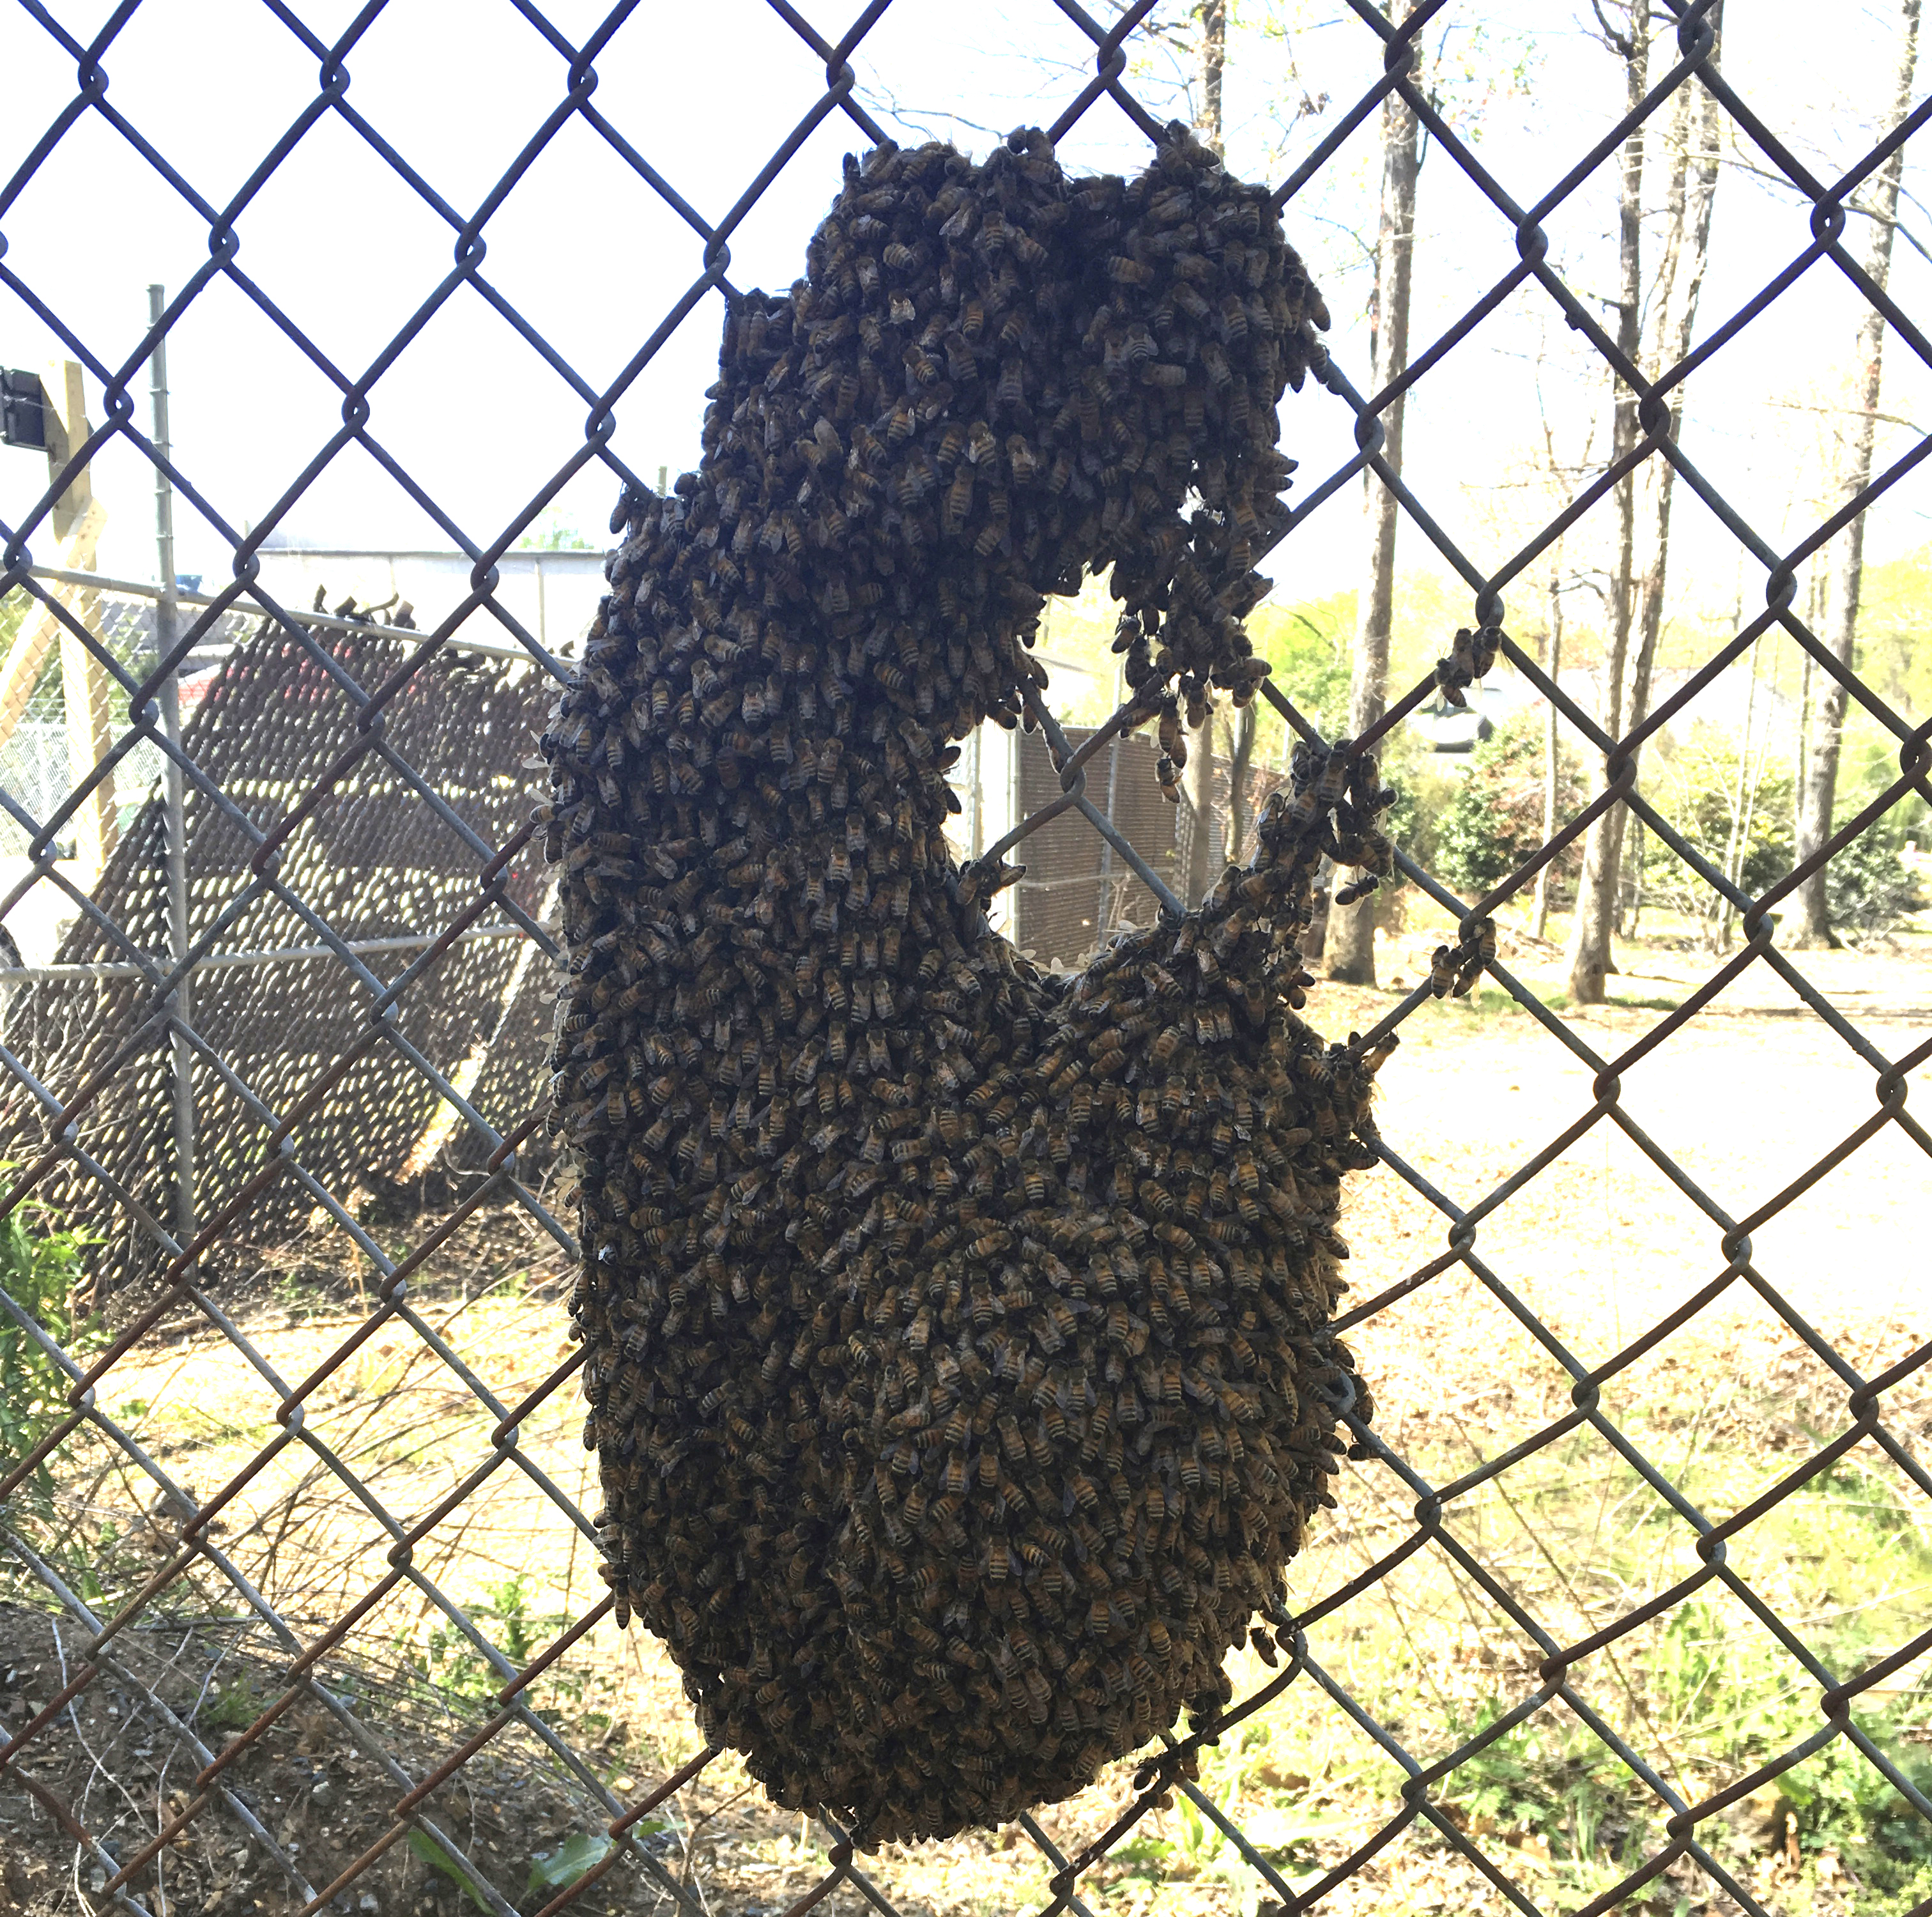 Swarm on Fence